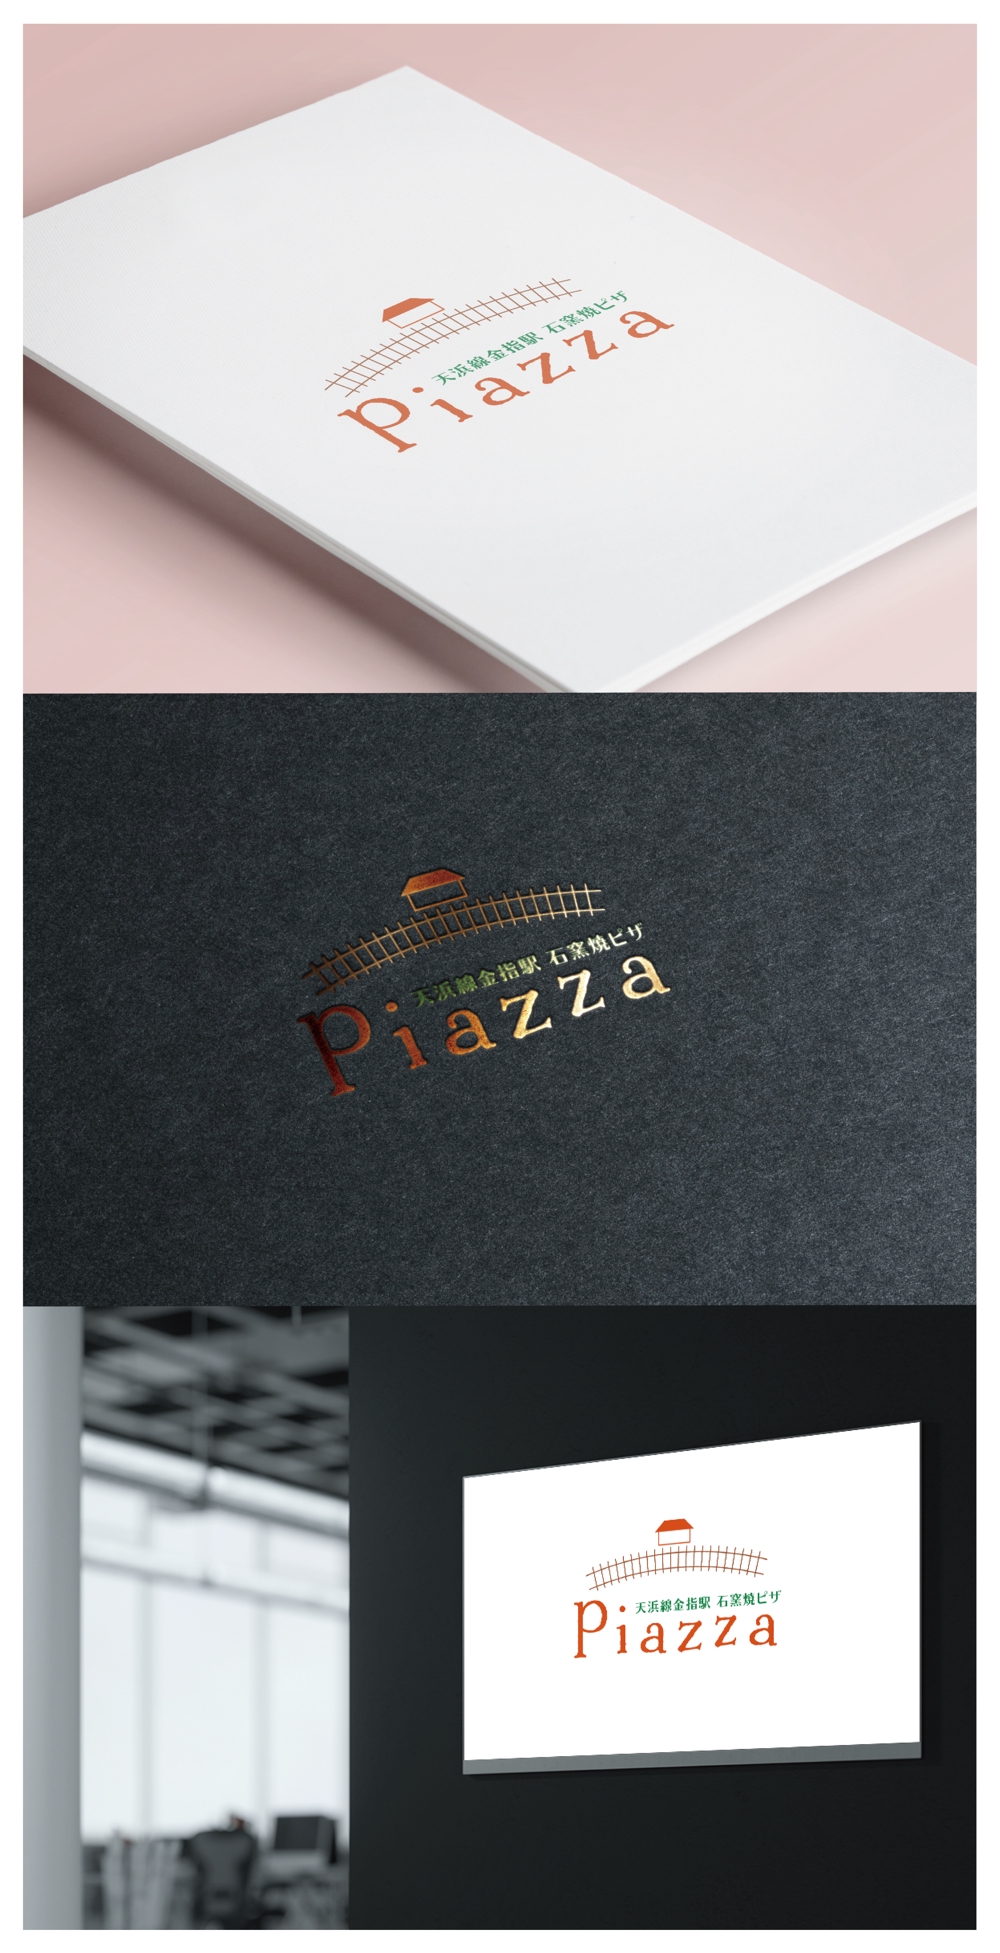 Piazza_logo01_01.jpg